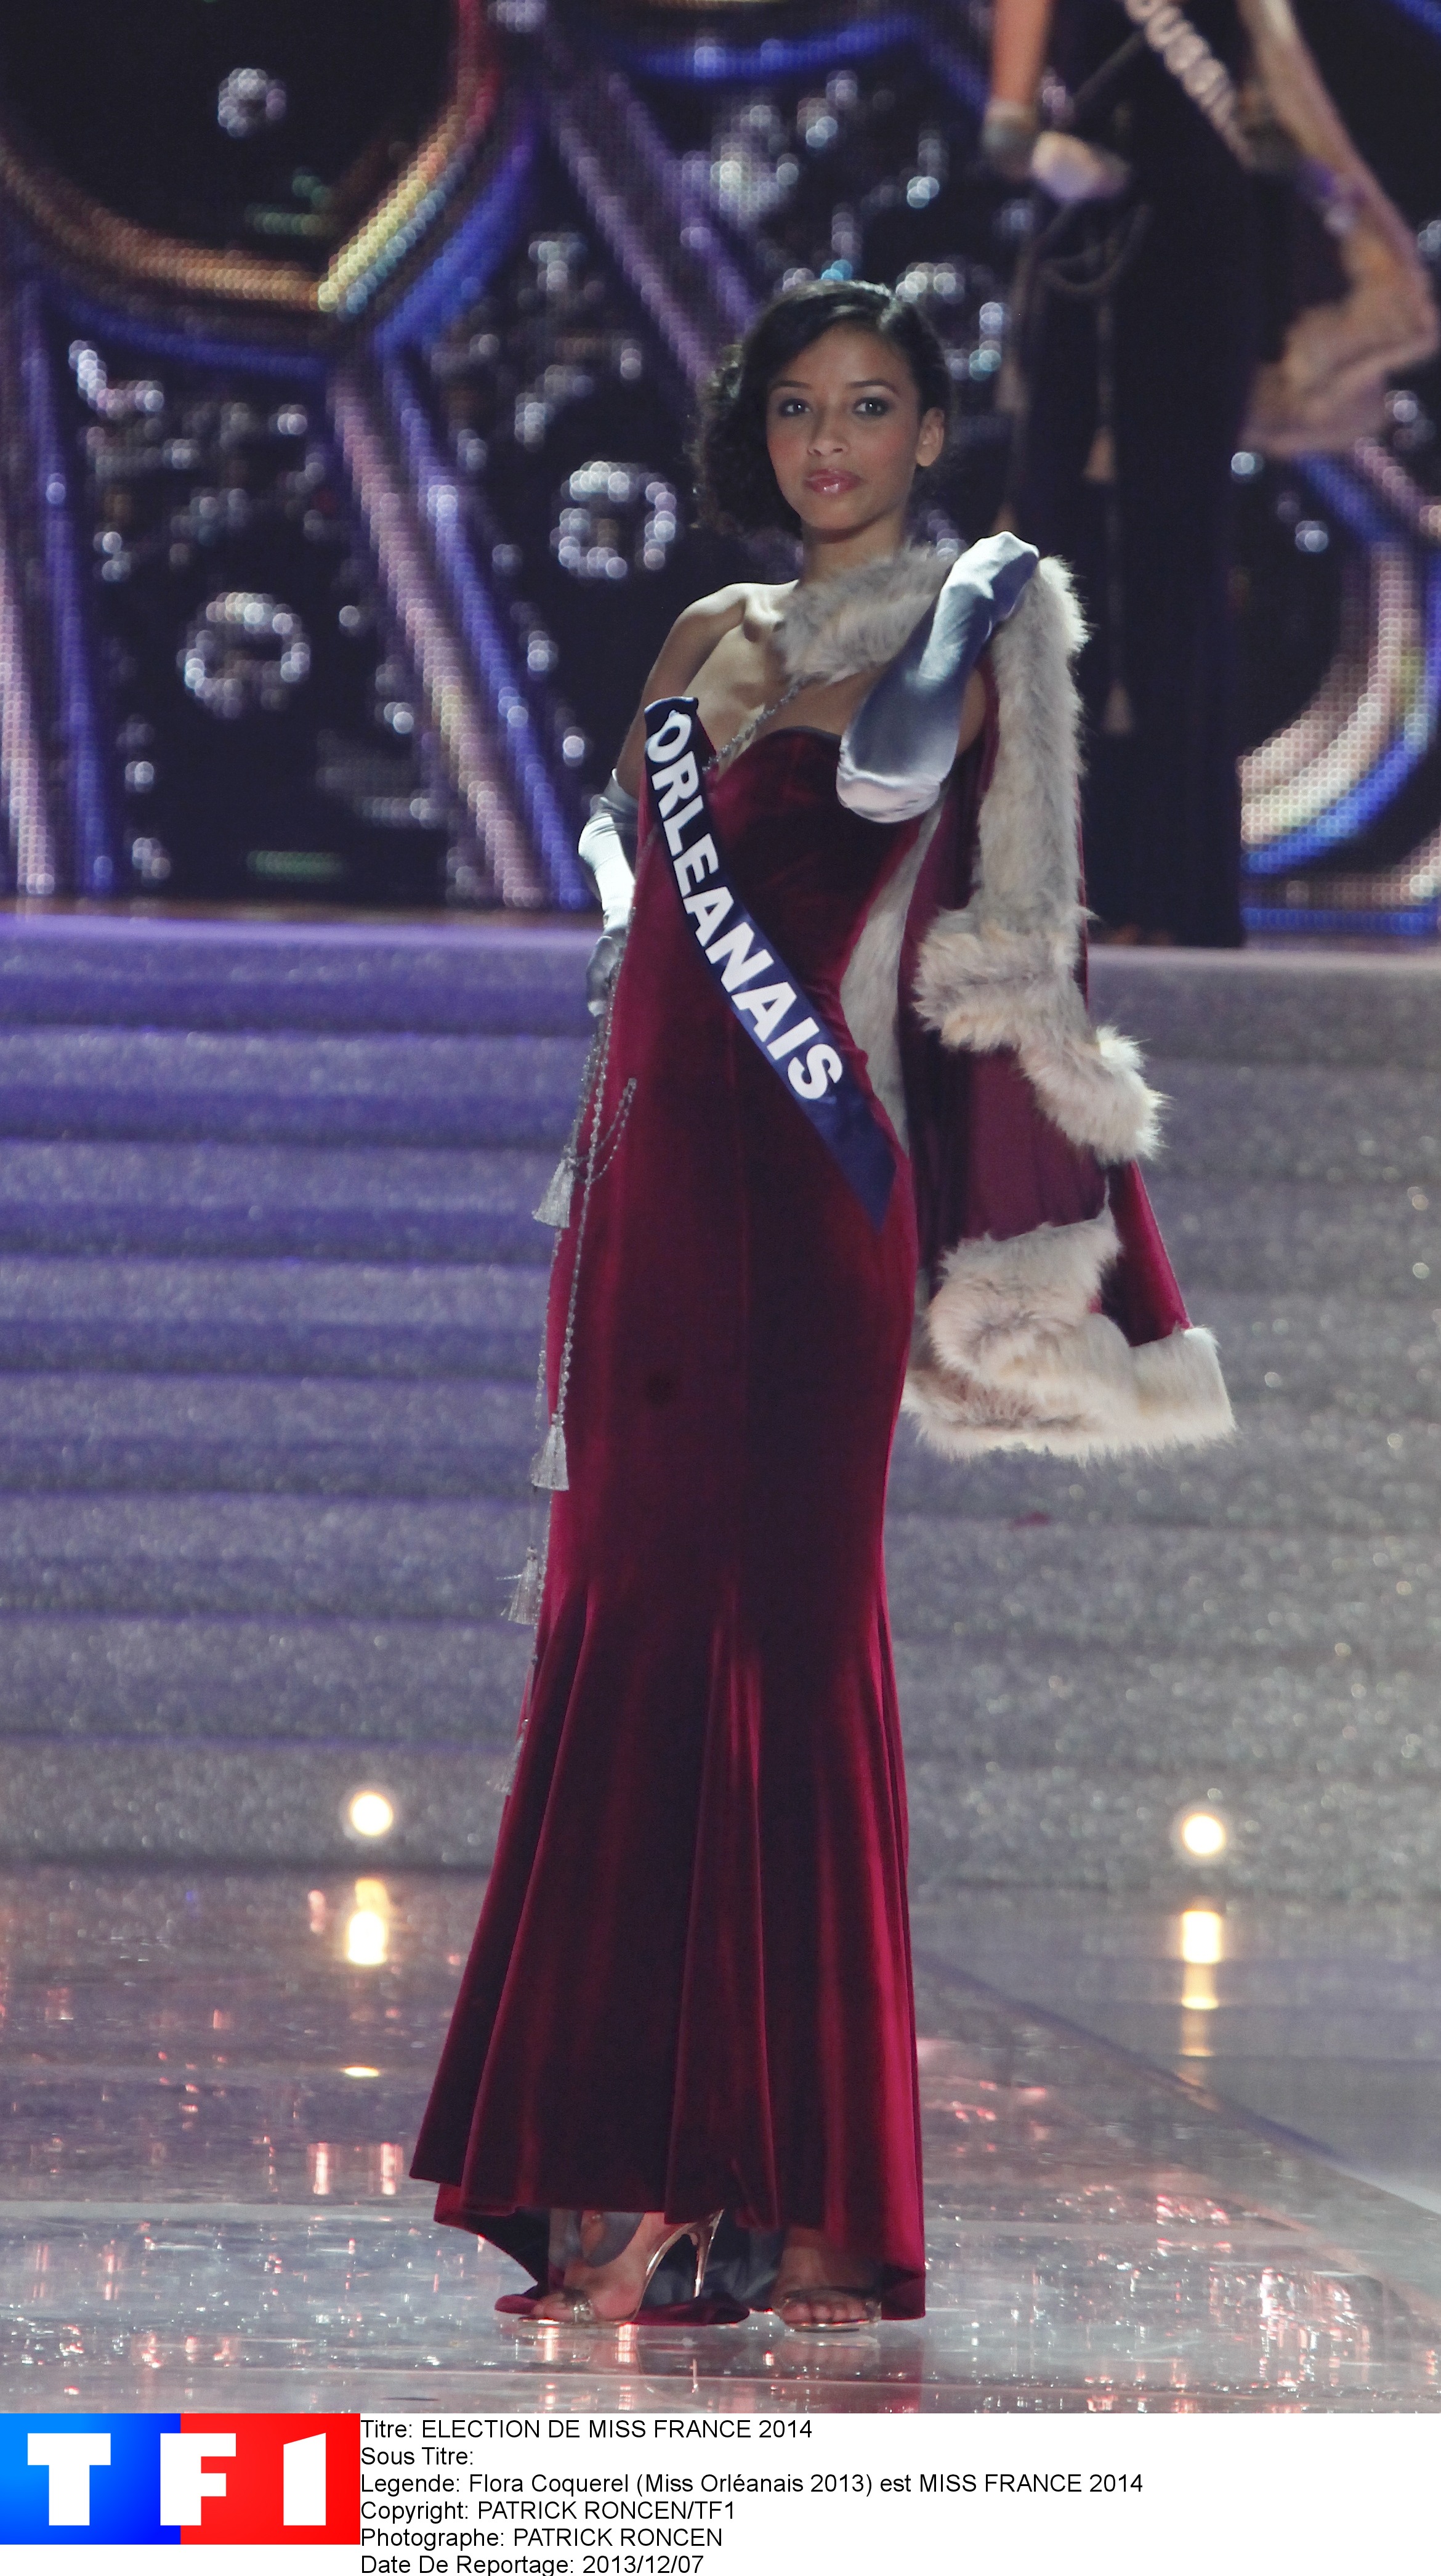 Miss France 2014 est Flora Coquerel !